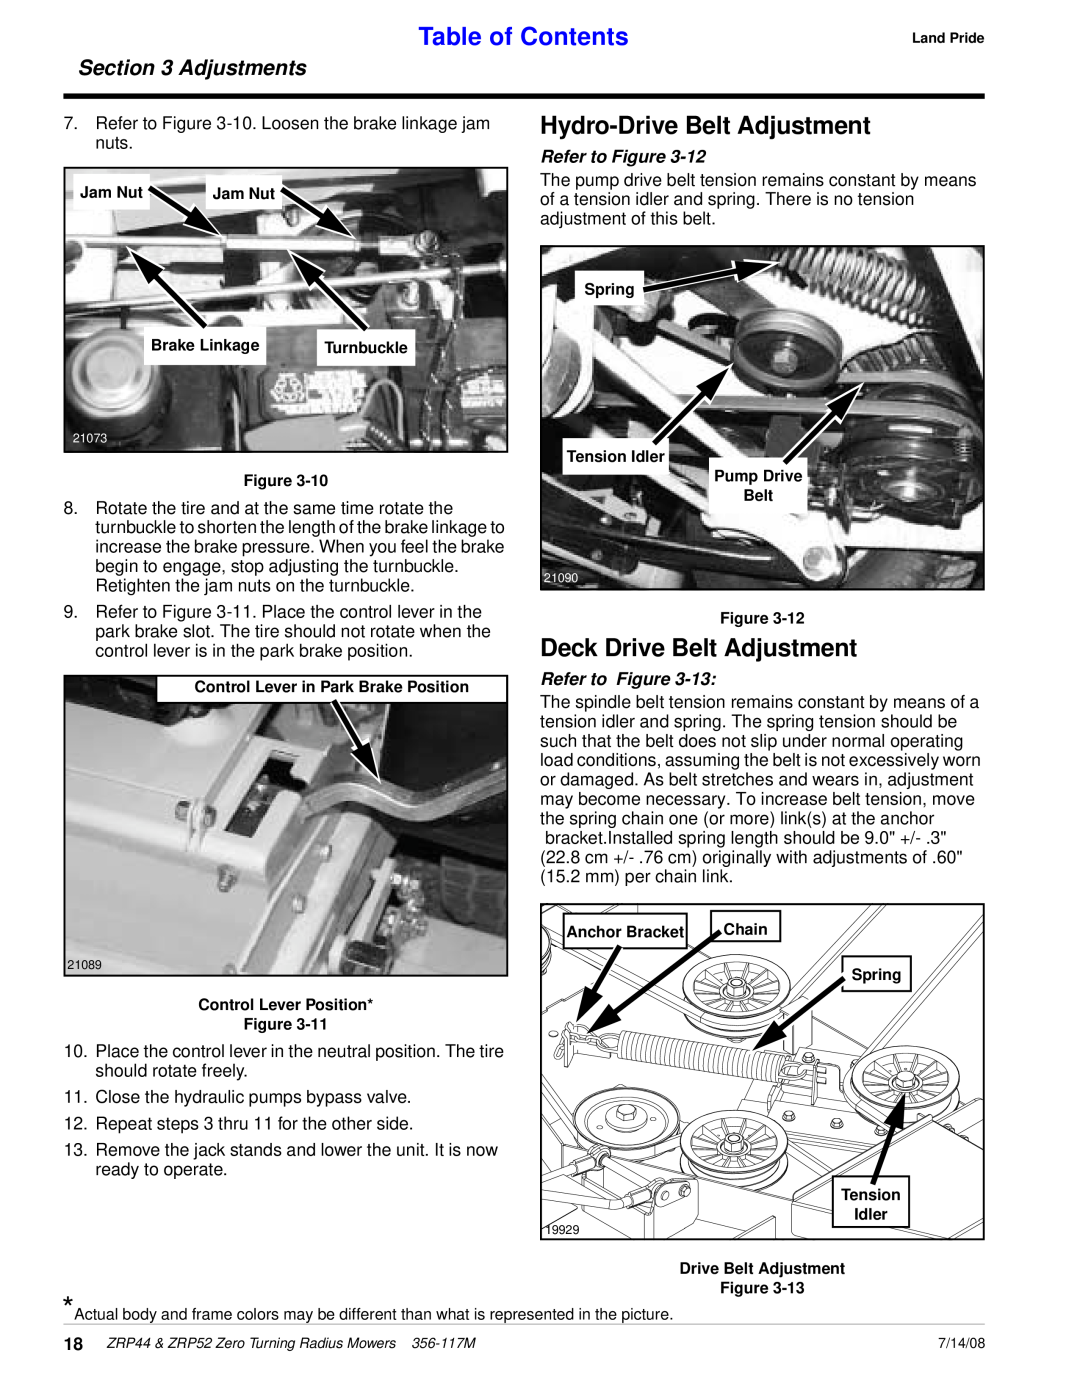 Land Pride ZRP52 Hydro-DriveBelt Adjustment, Deck Drive Belt Adjustment, Table of Contents, Adjustments, Refer to Figure 